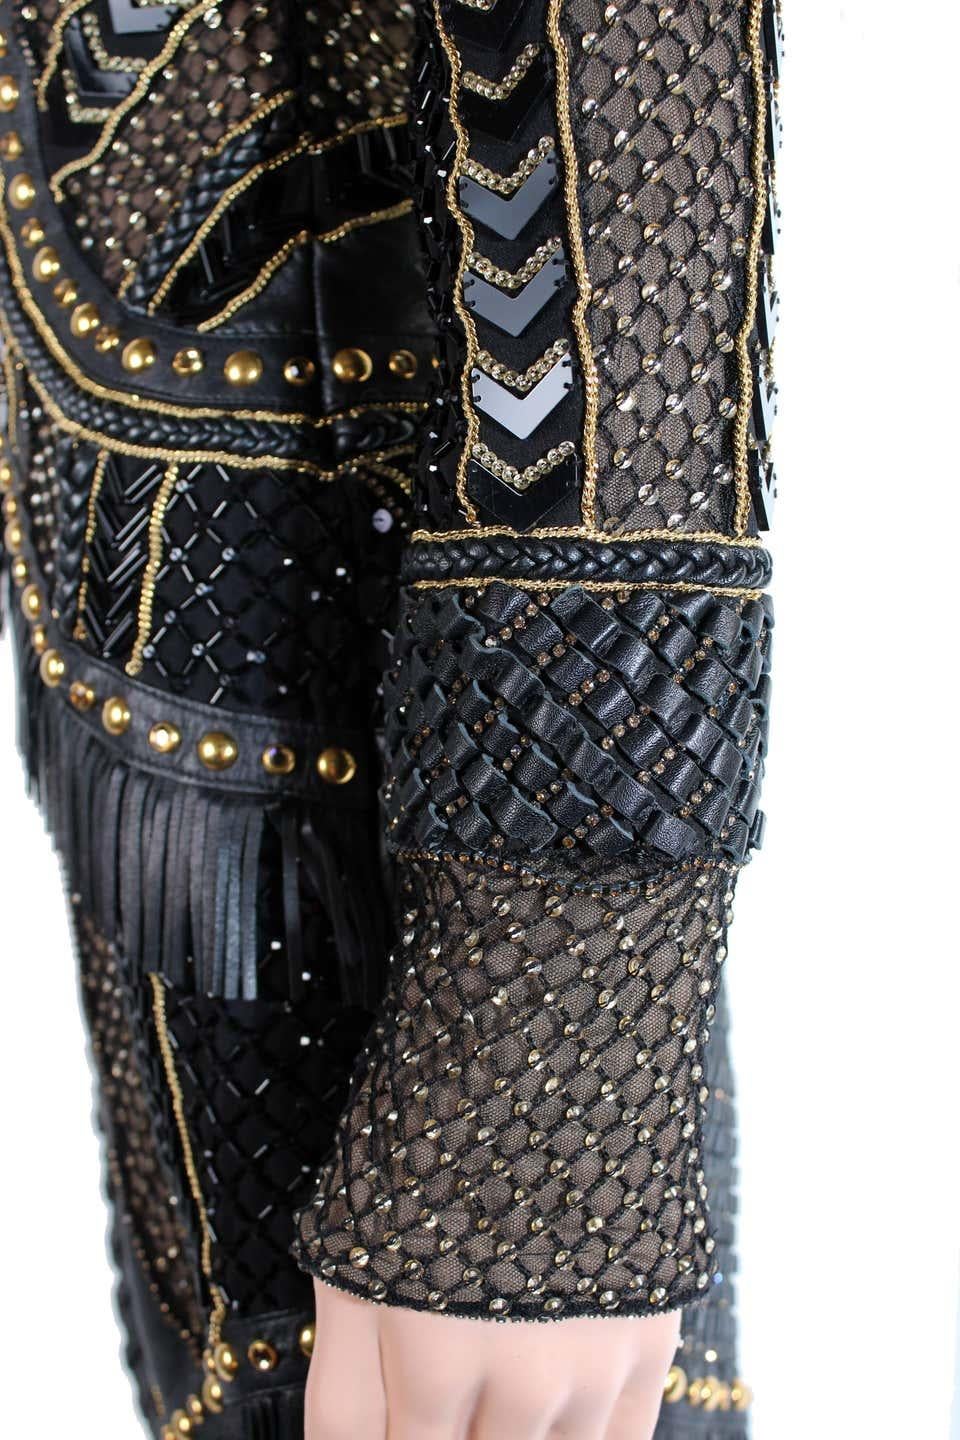 New Versace Crystal and Stud Embellished Leather Dress w/ Fringe 6